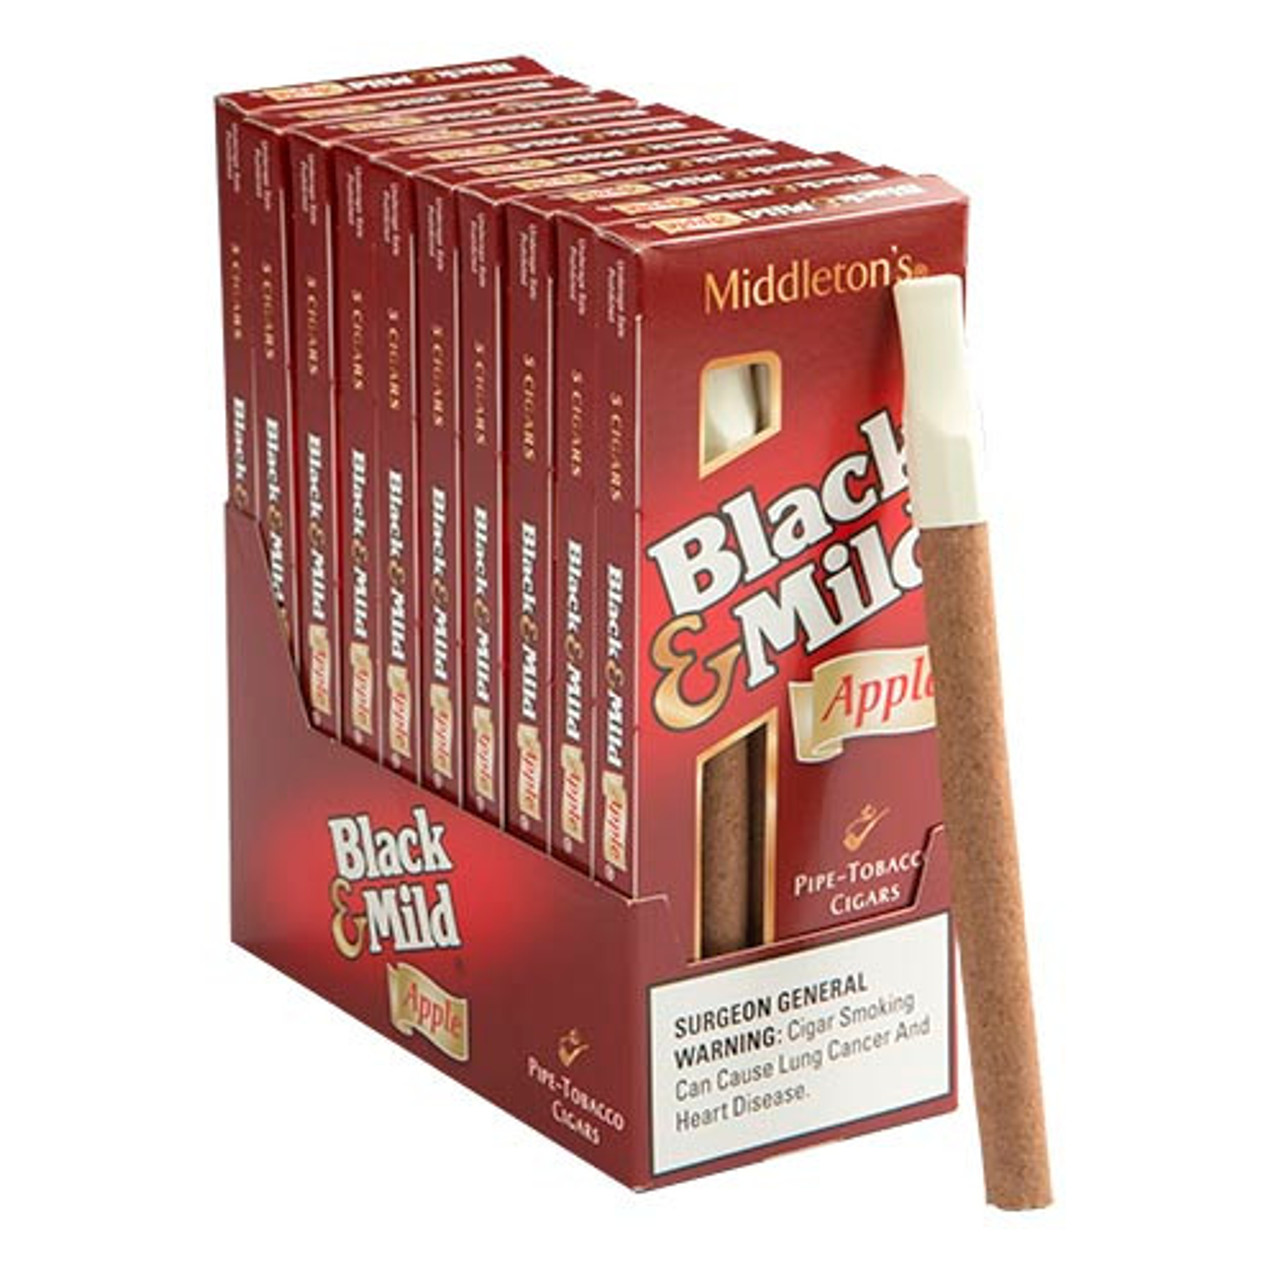 Black & Mild Apple Cigars (10 packs of 5) - Natural *Box